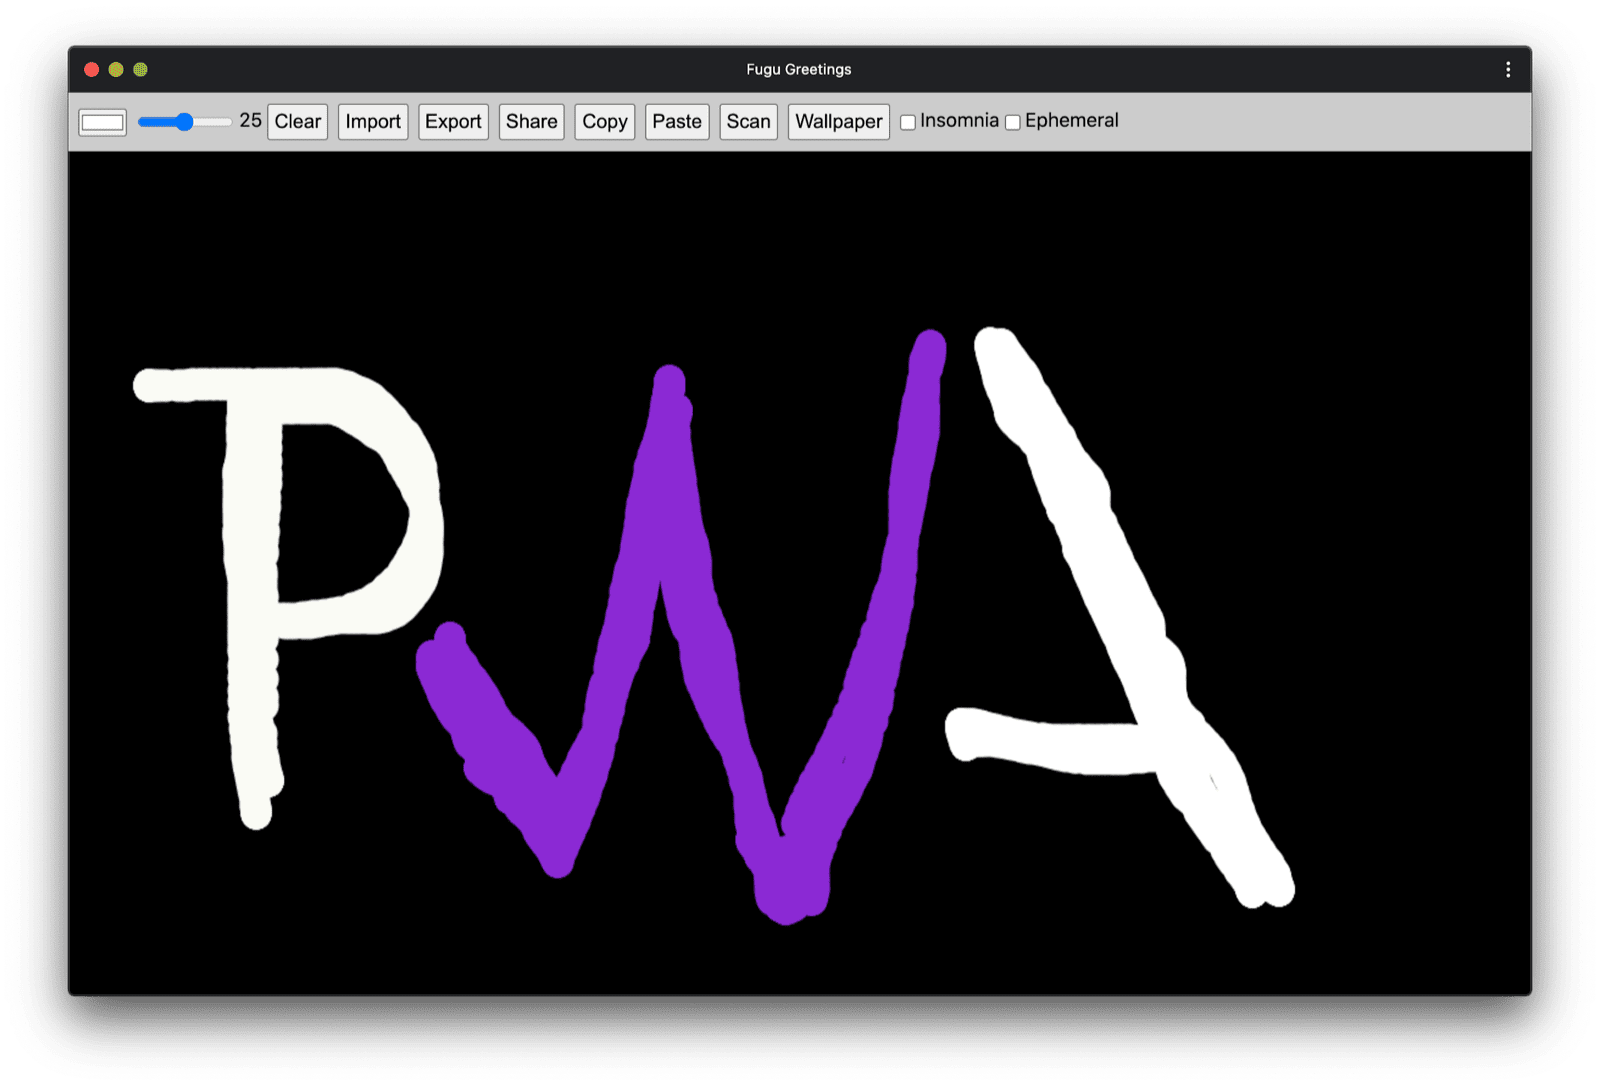 Fugu приветствует PWA рисунком, напоминающим логотип сообщества PWA.